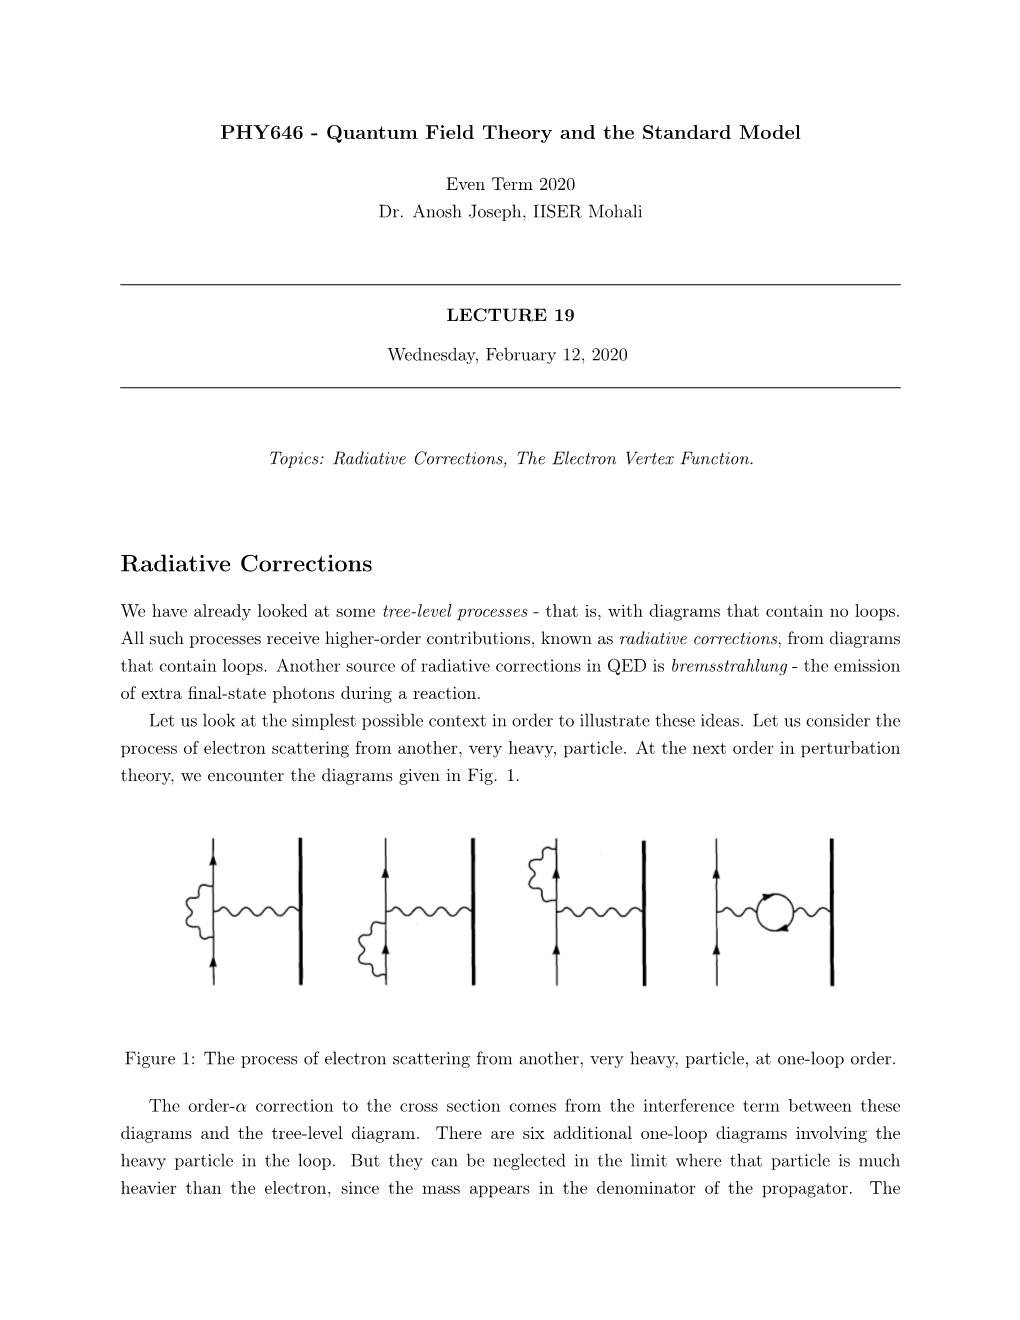 Radiative Corrections, the Electron Vertex Function